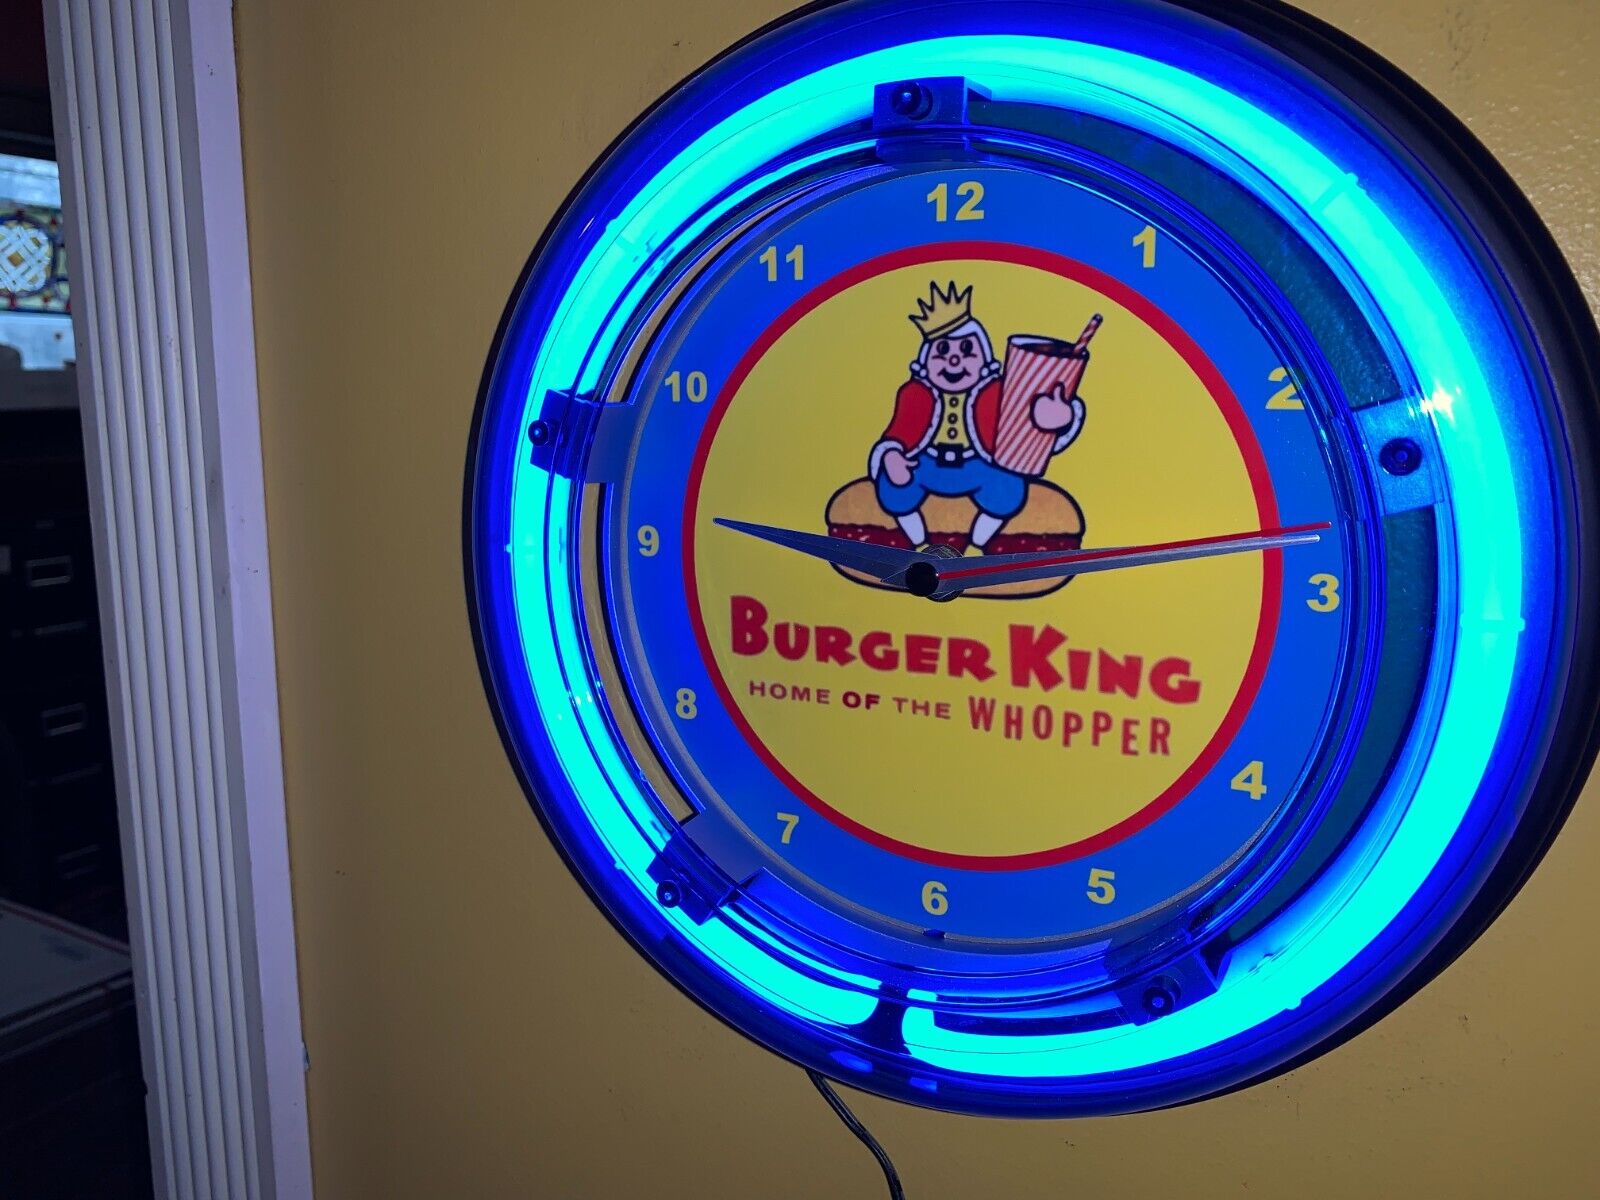 Burger King Whopper Restaurant Diner Kitchen Neon Wall Clock Advertising Sign